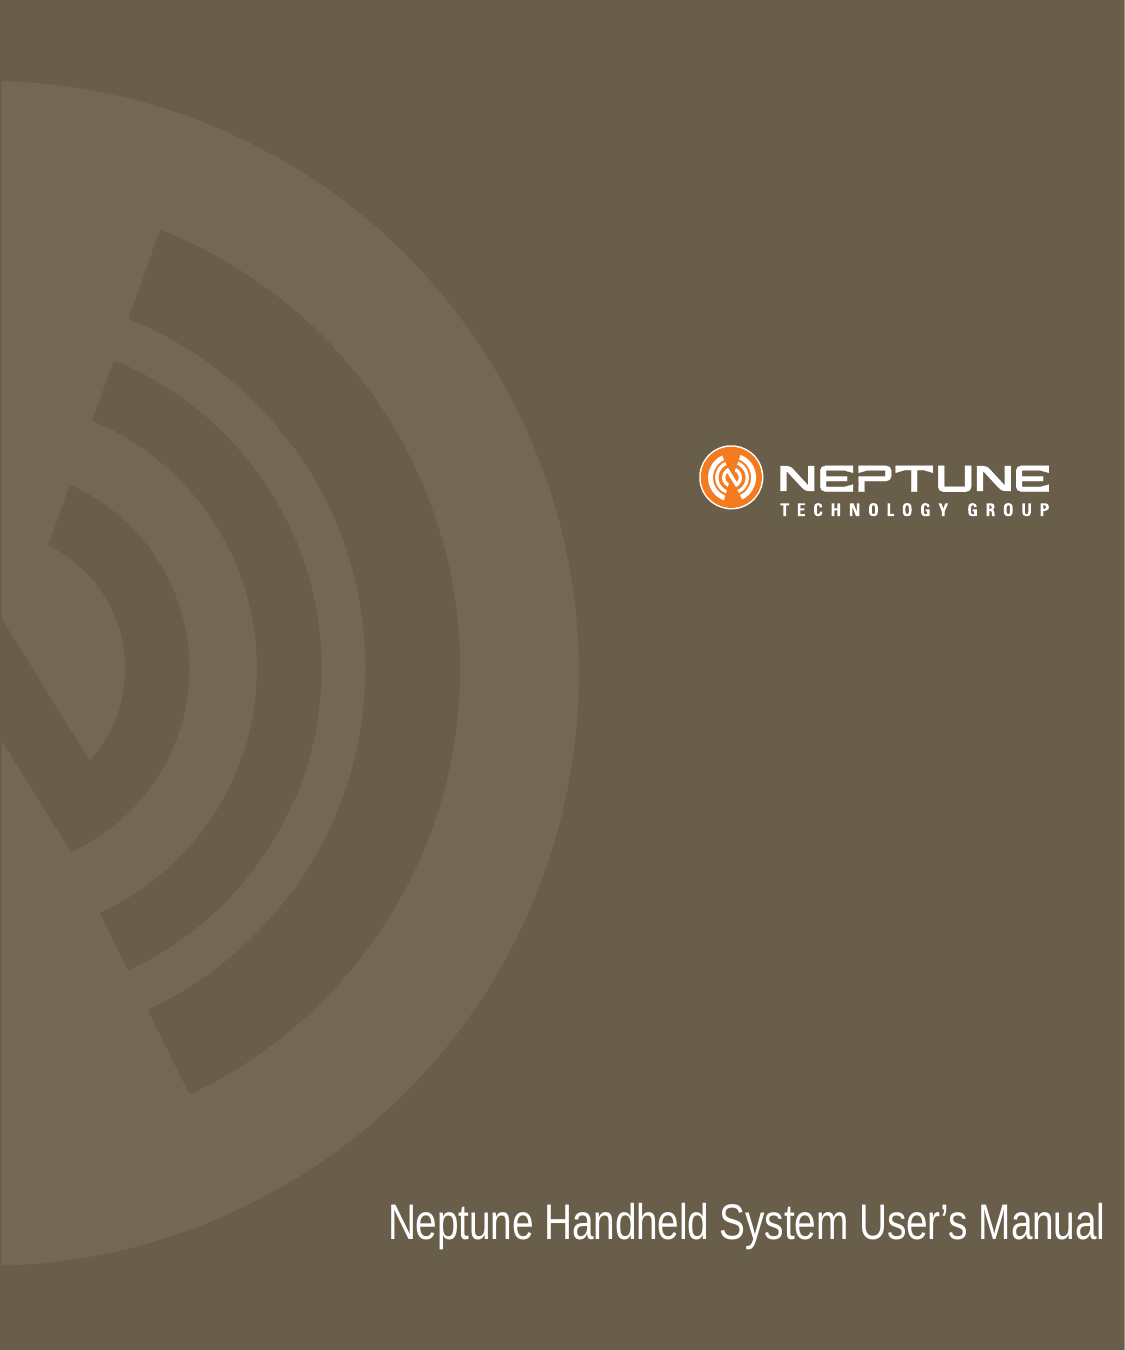 Neptune Handheld System User’s Manual 